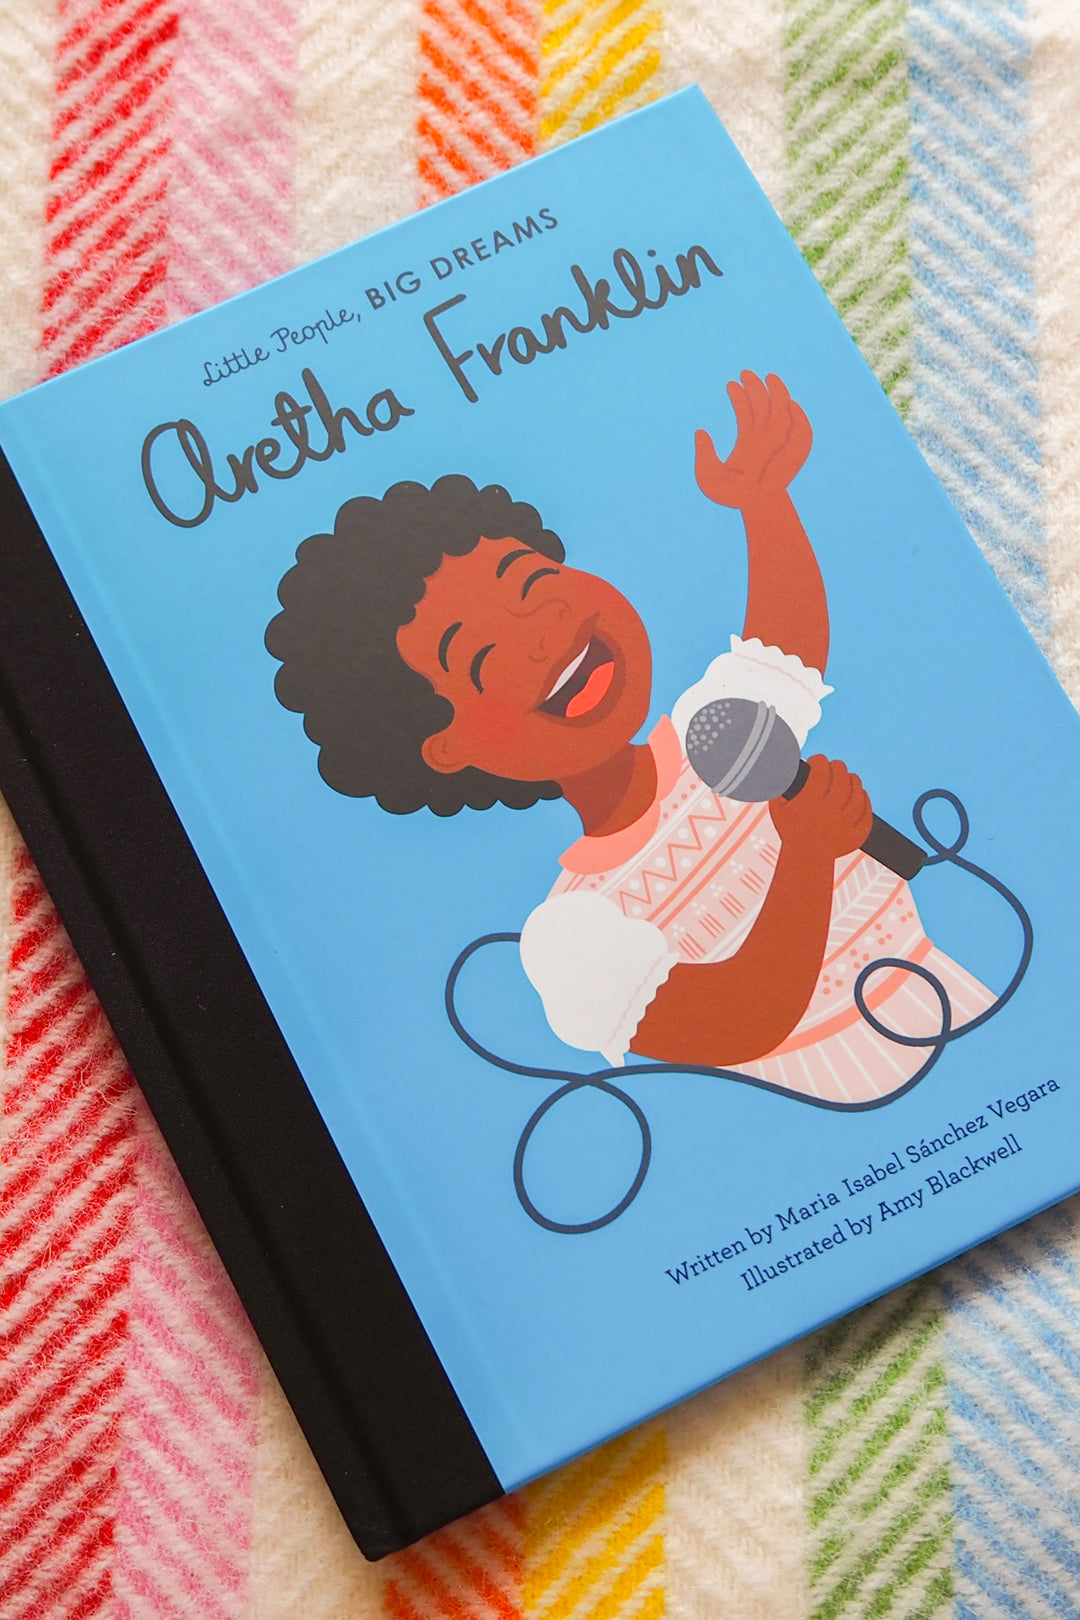 Aretha Franklin- Little People, Big Dreams